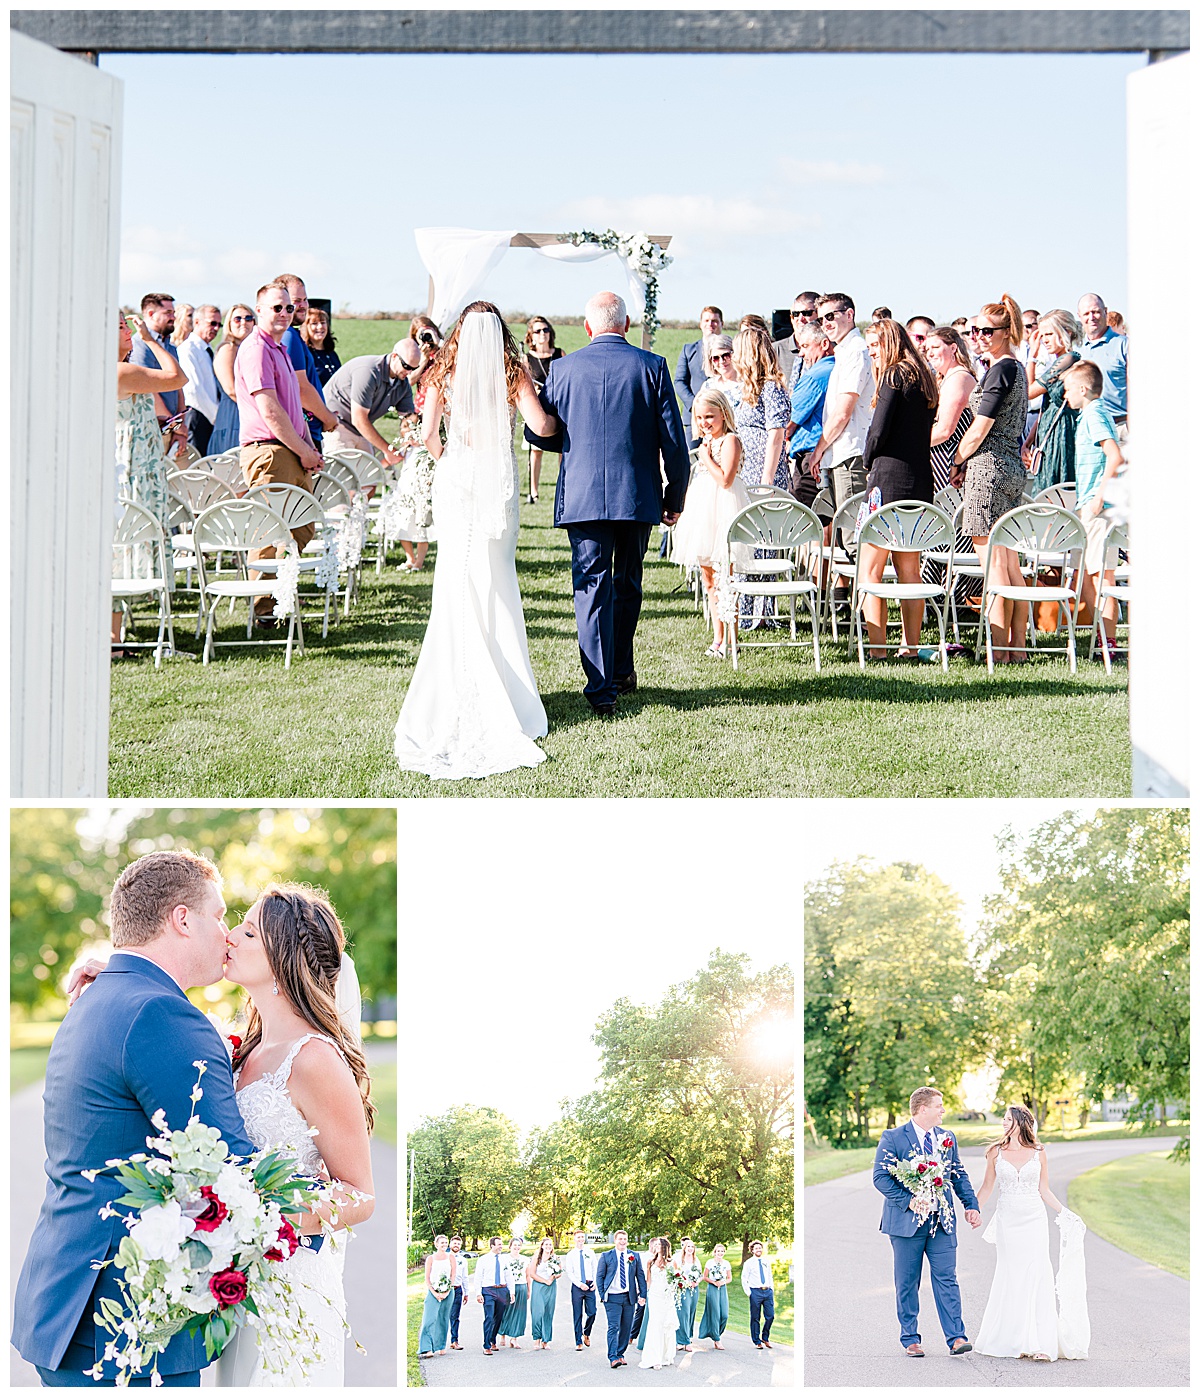 photos from a backyard wedding in wisconsin